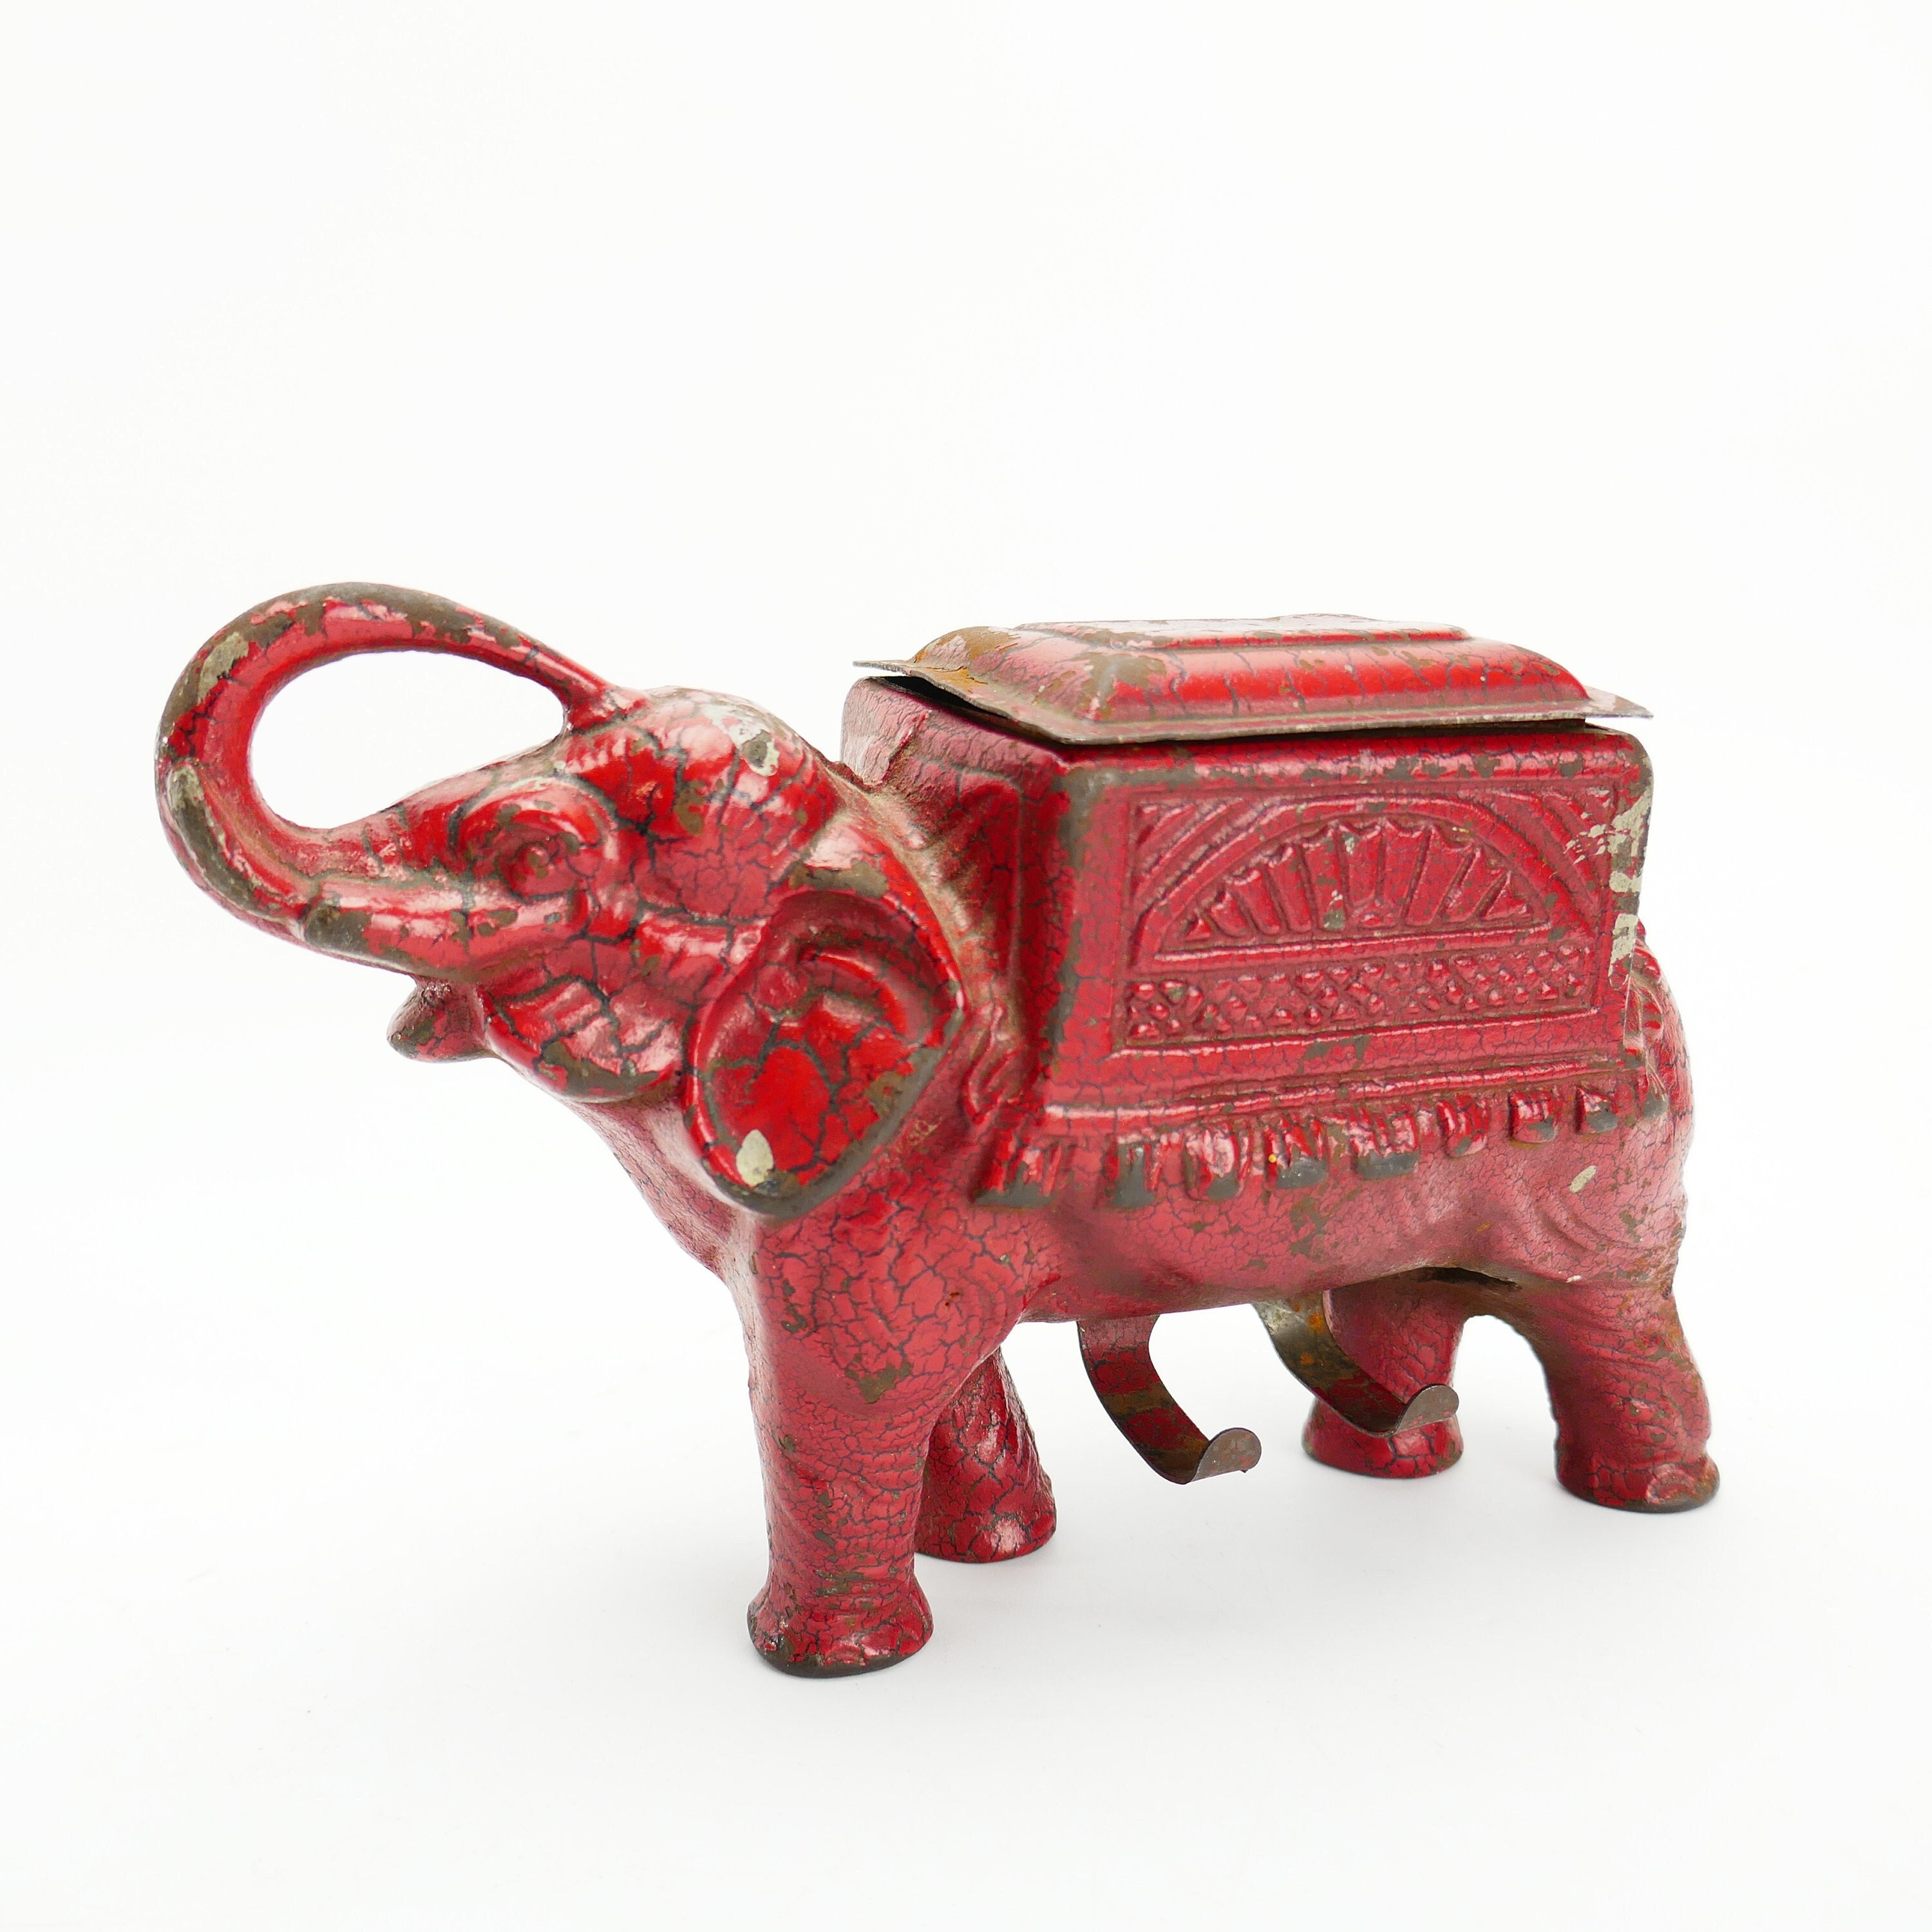 Zigarettenspender Elefant Made in Spain um 1930 - bei Shop KuSeRa